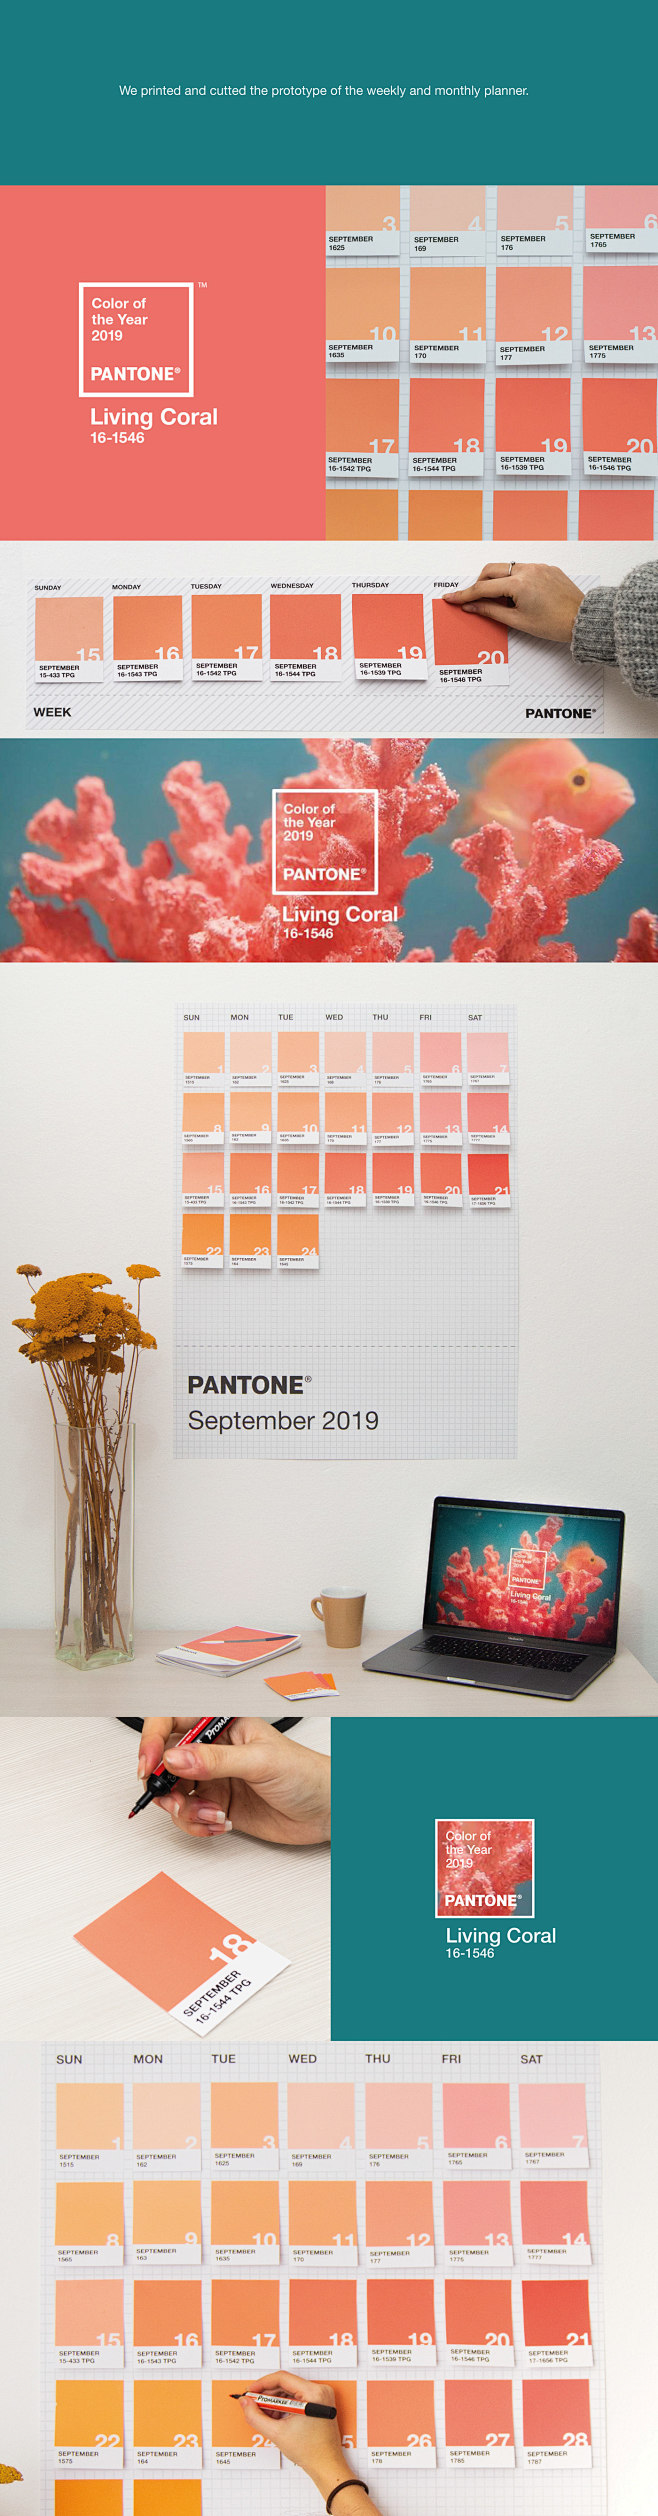 PANTONE Calendar 201...